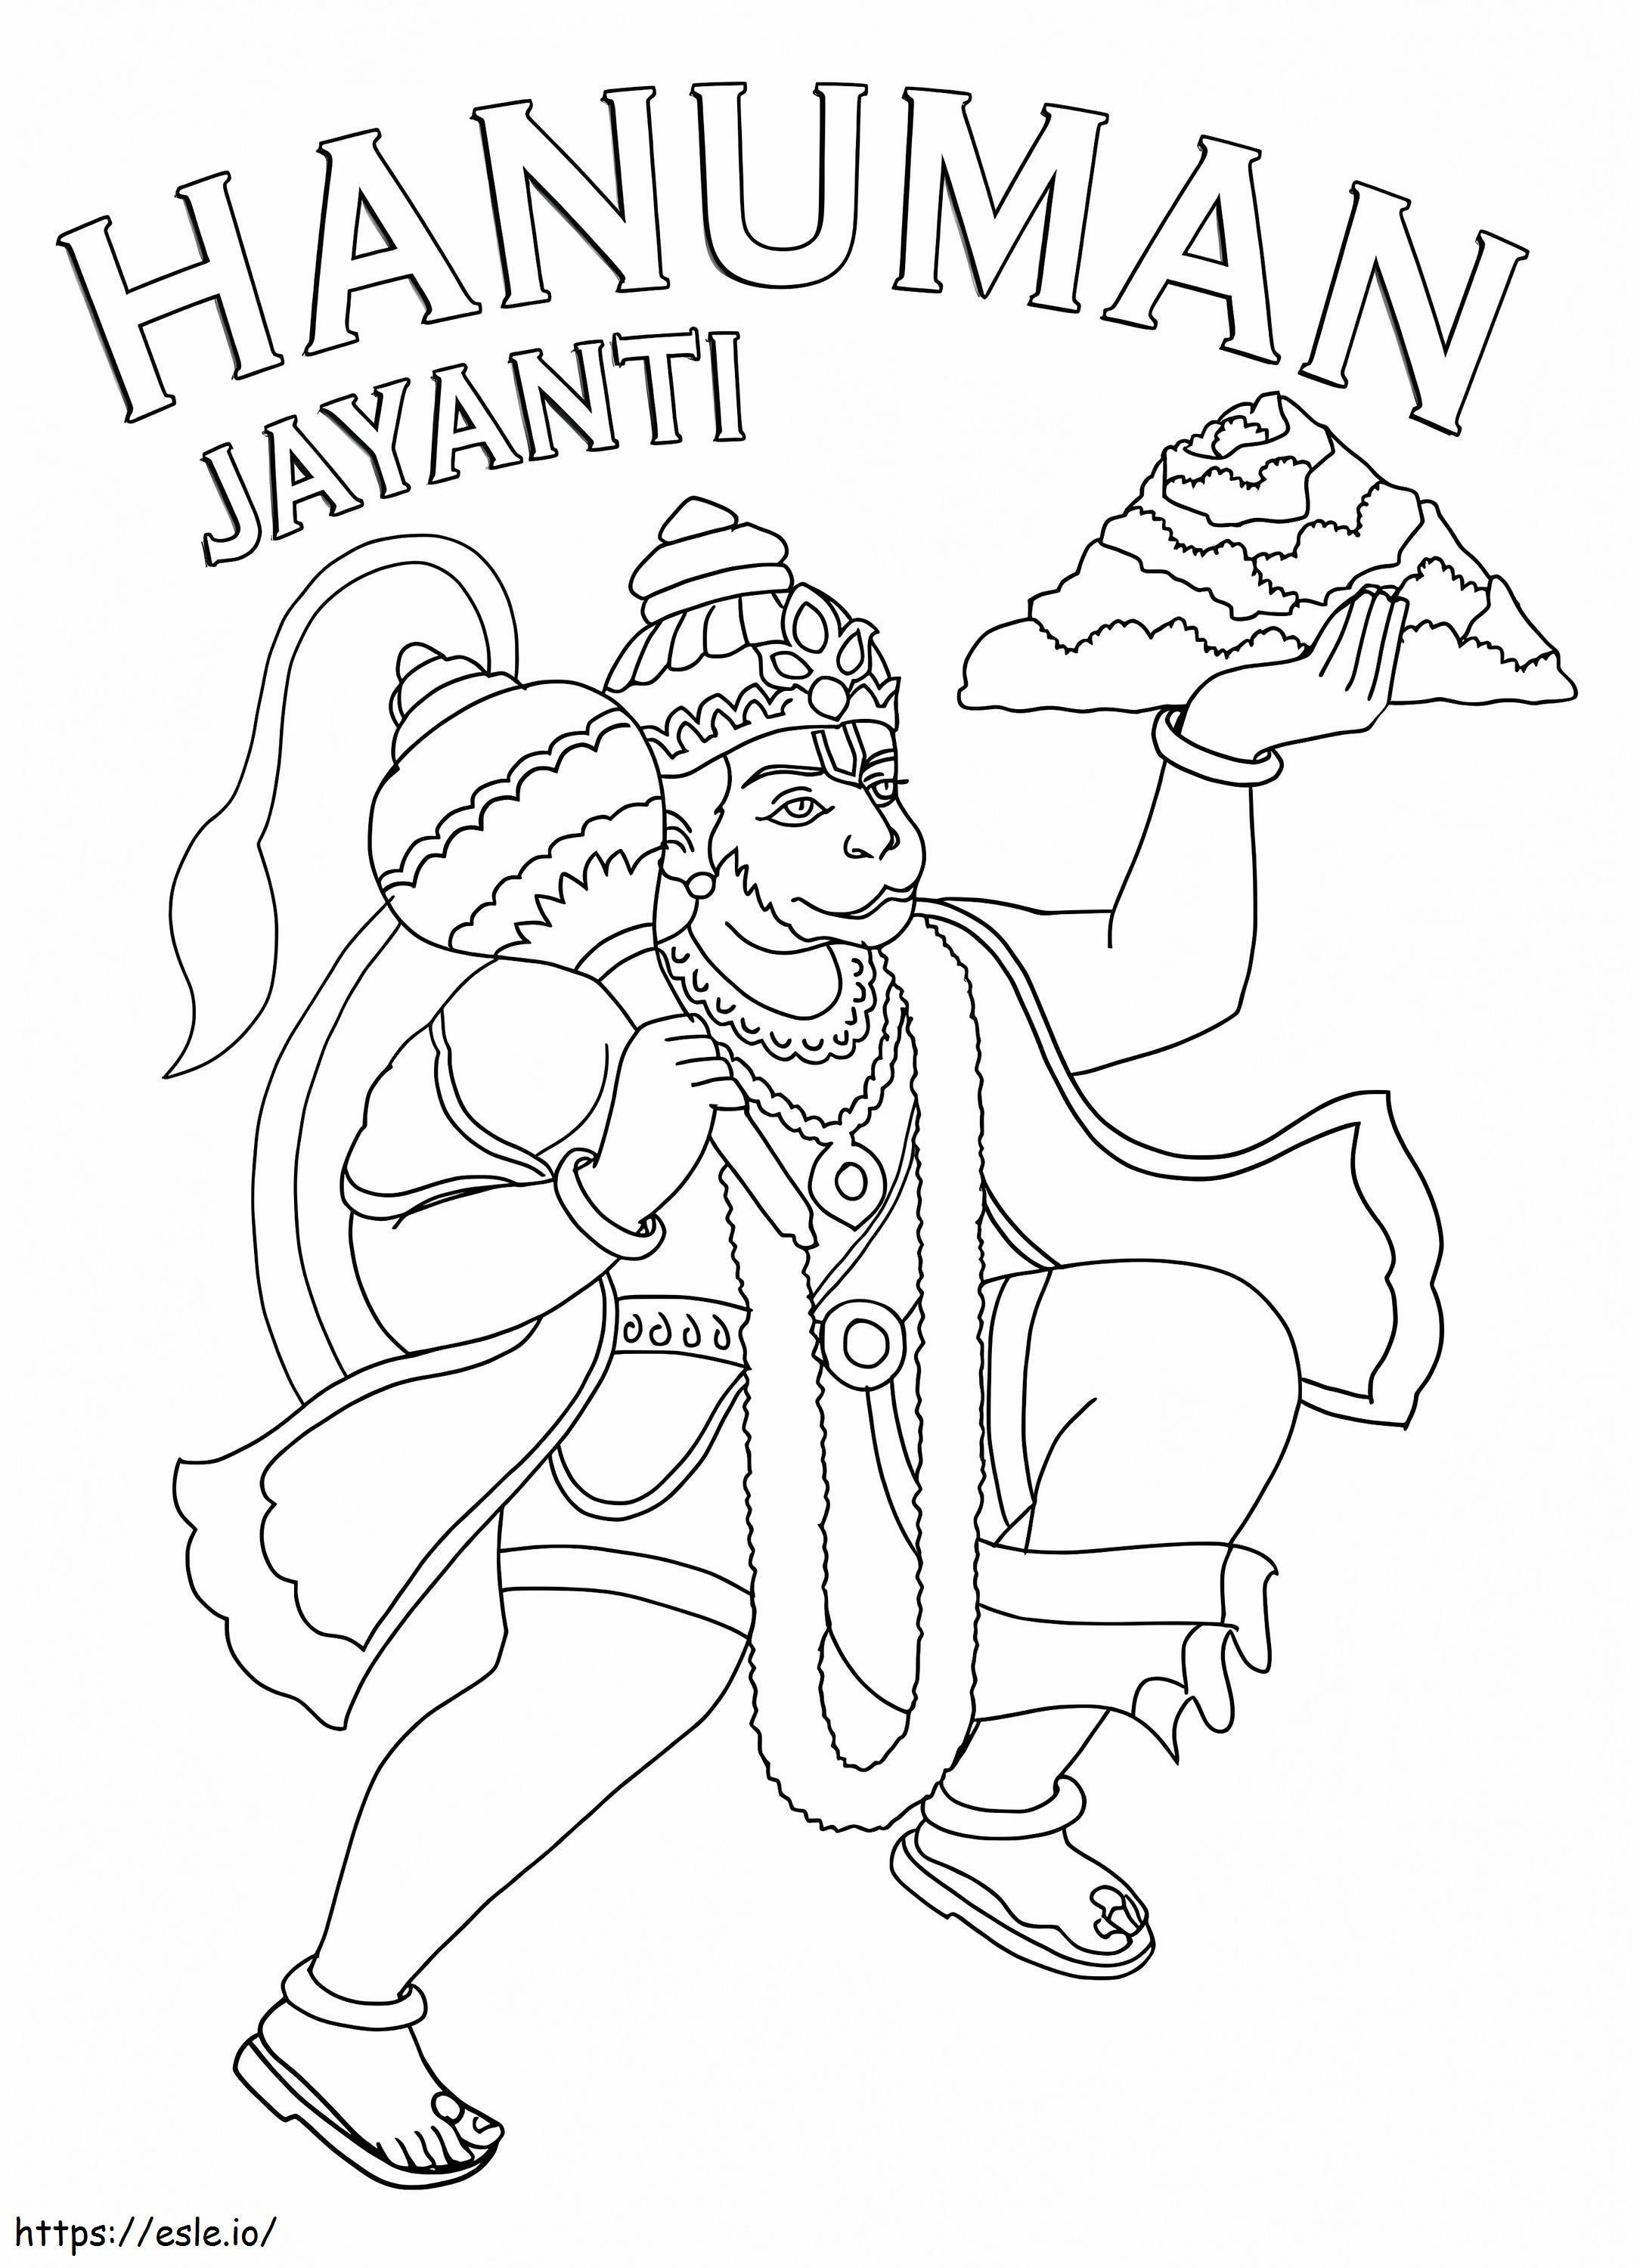 Hanuman Jayanti 8 da colorare